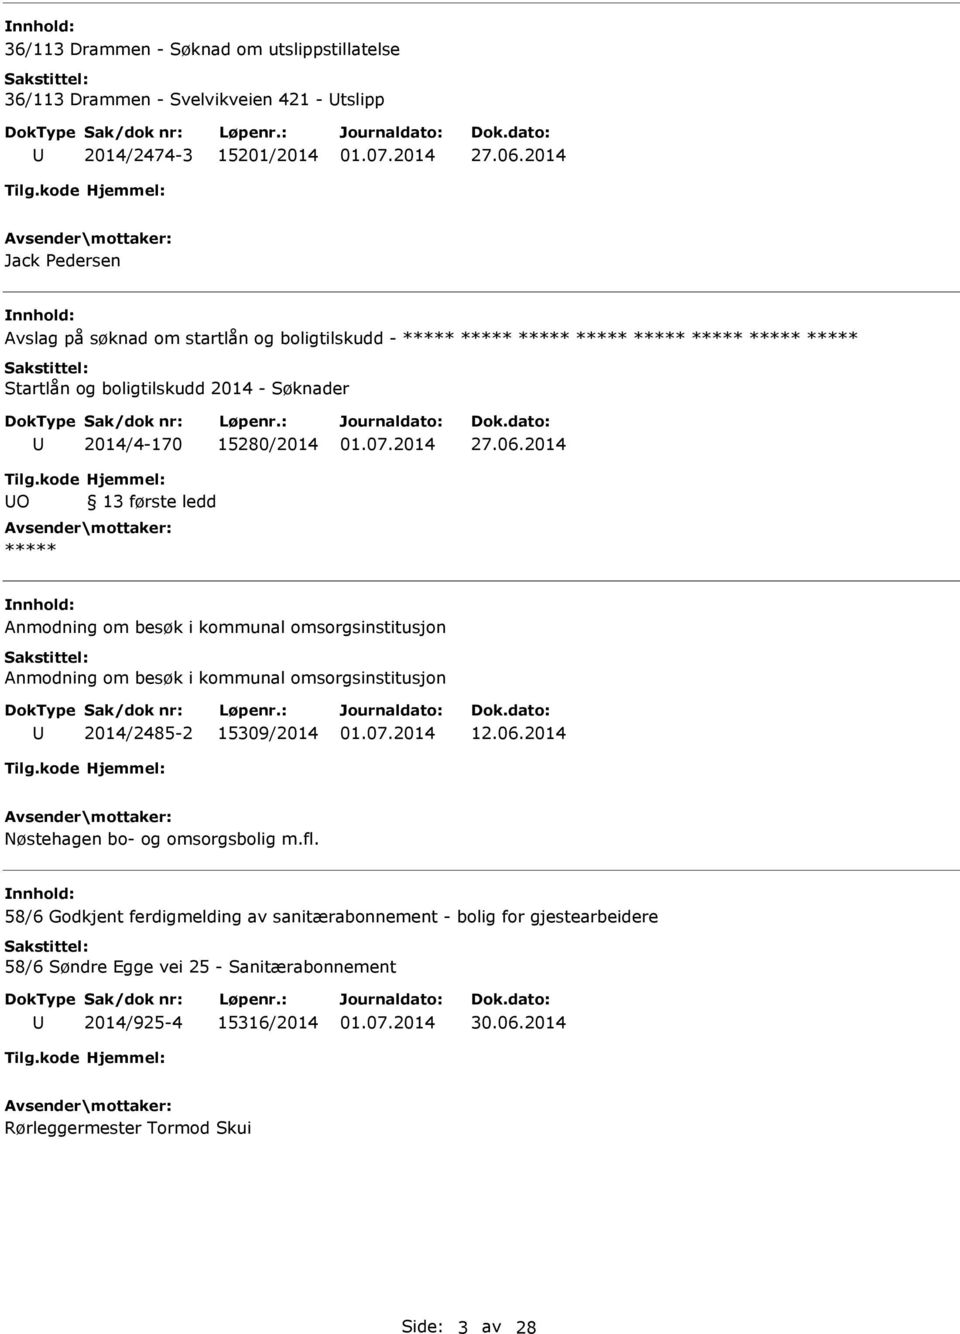 2014 O Anmodning om besøk i kommunal omsorgsinstitusjon Anmodning om besøk i kommunal omsorgsinstitusjon 2014/2485-2 15309/2014 12.06.